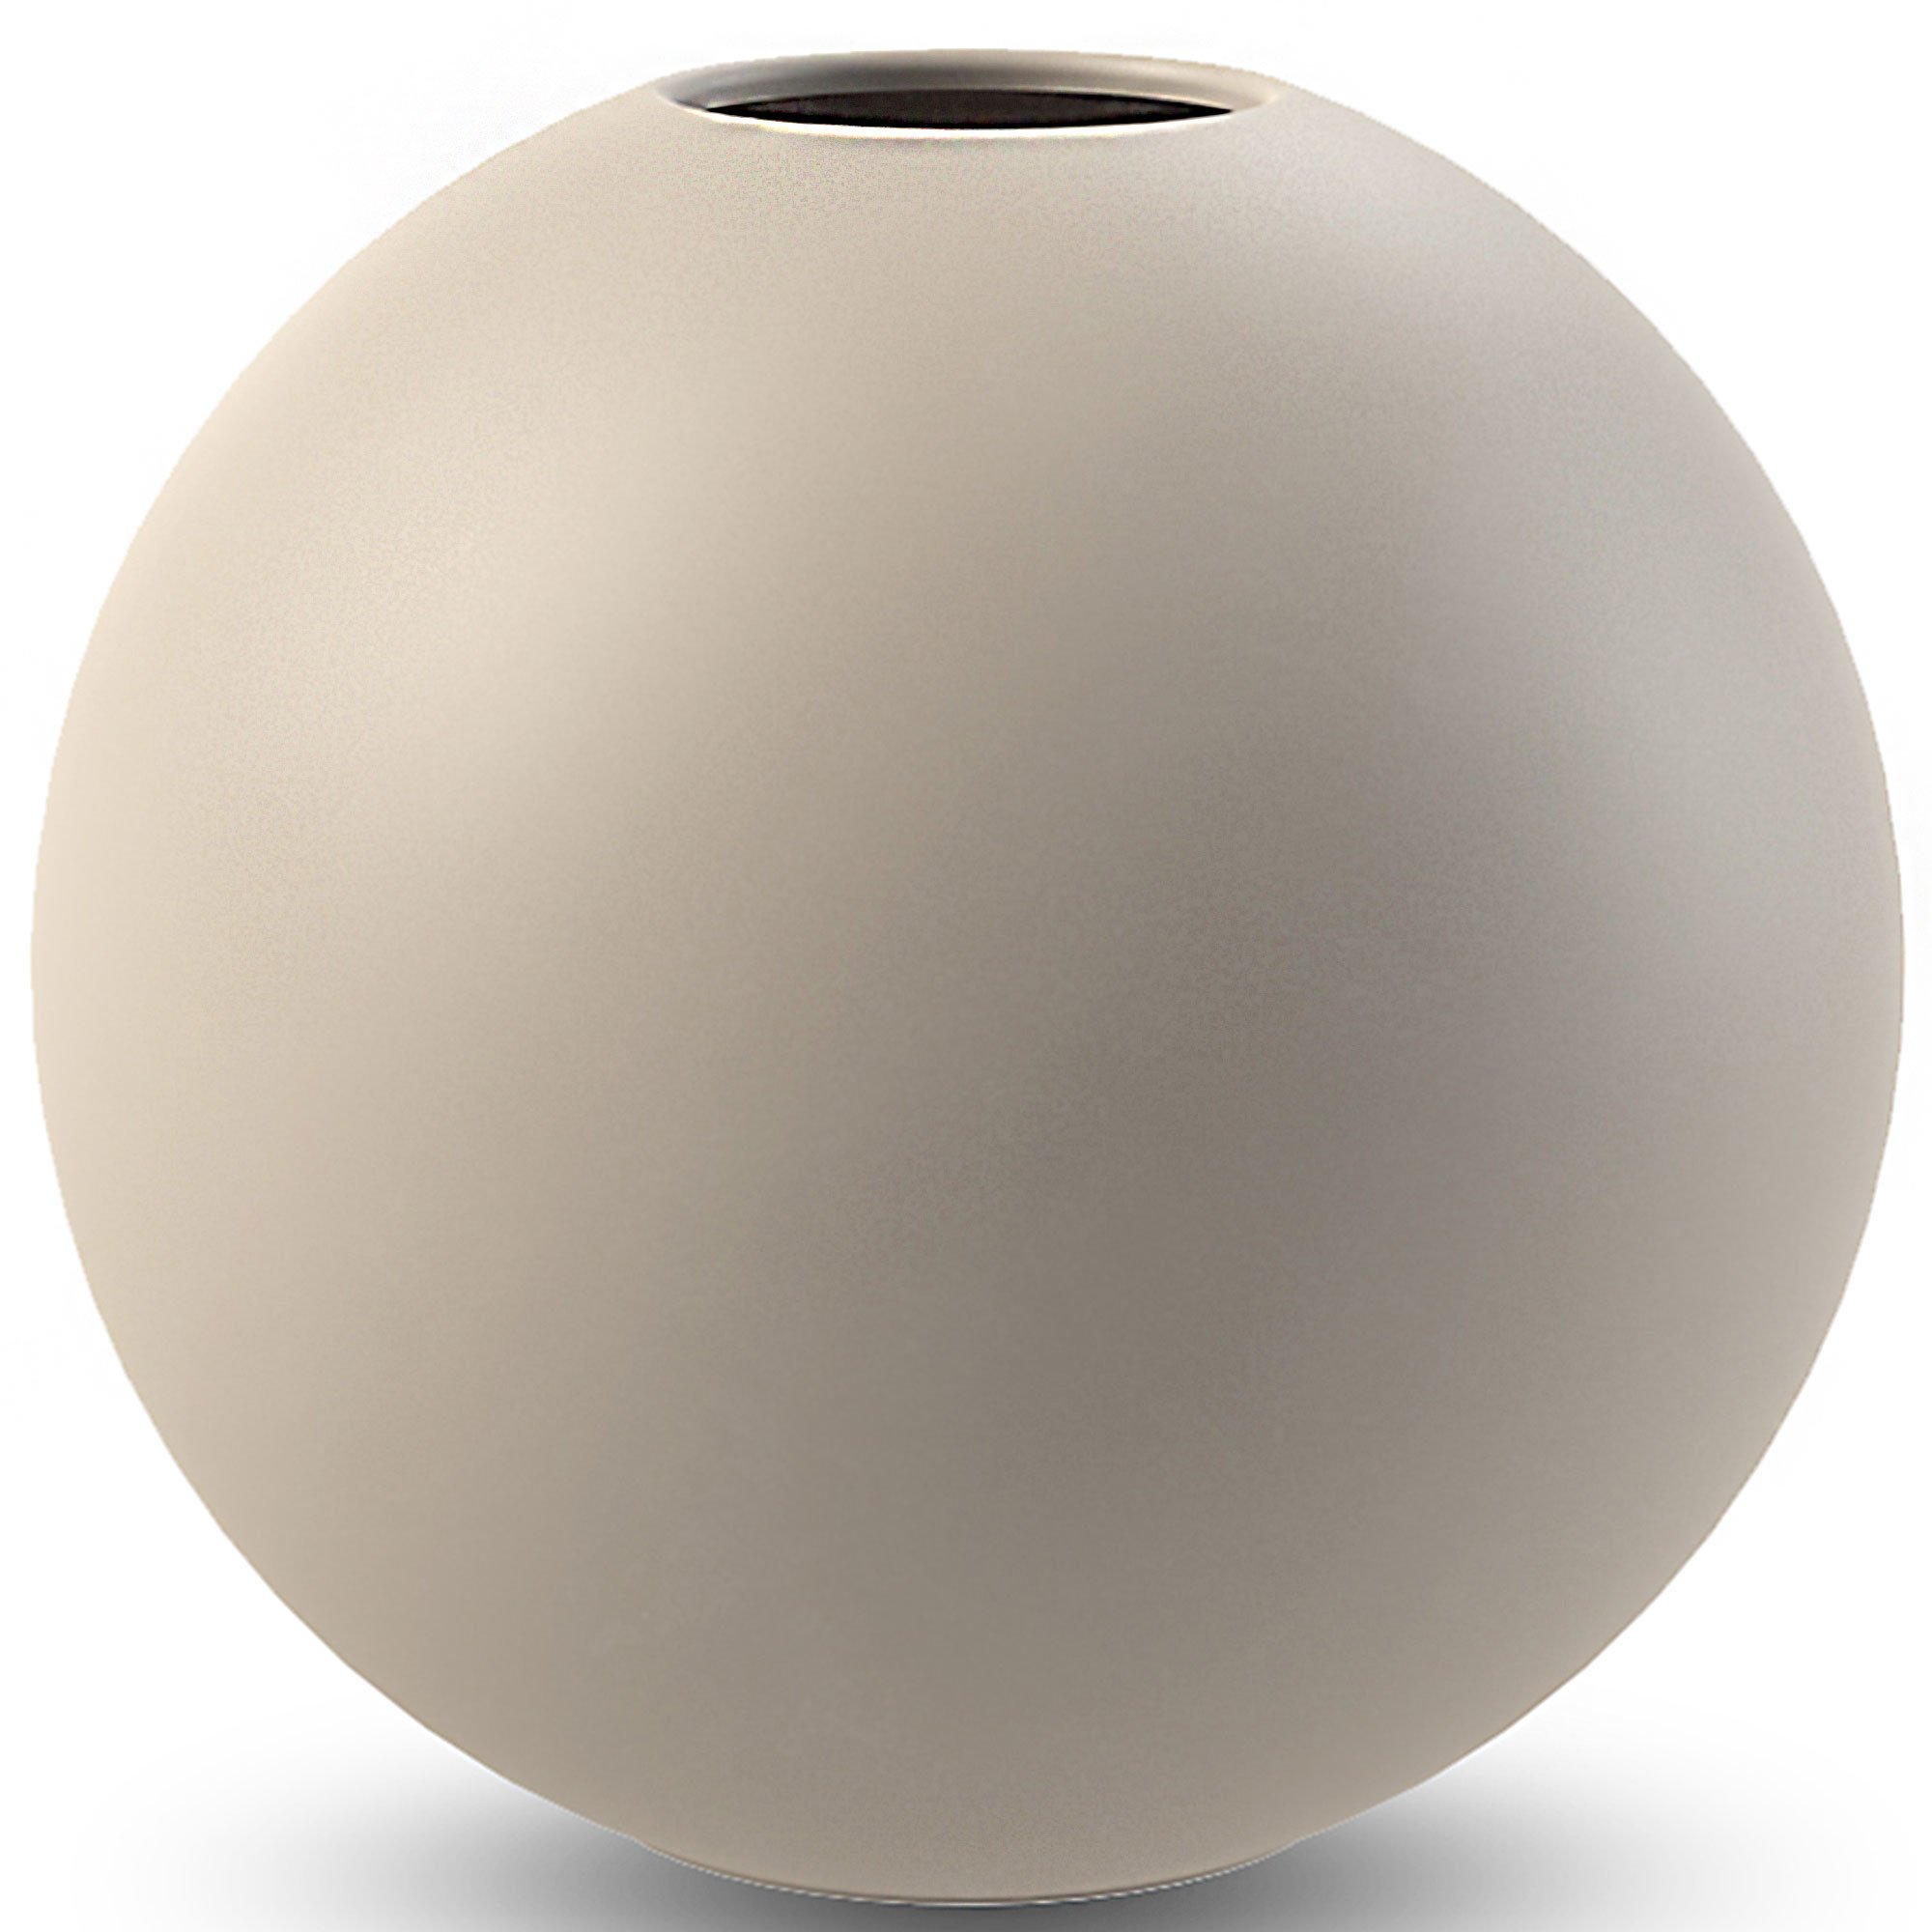 Cooee Design Ball vas 20 cm sand